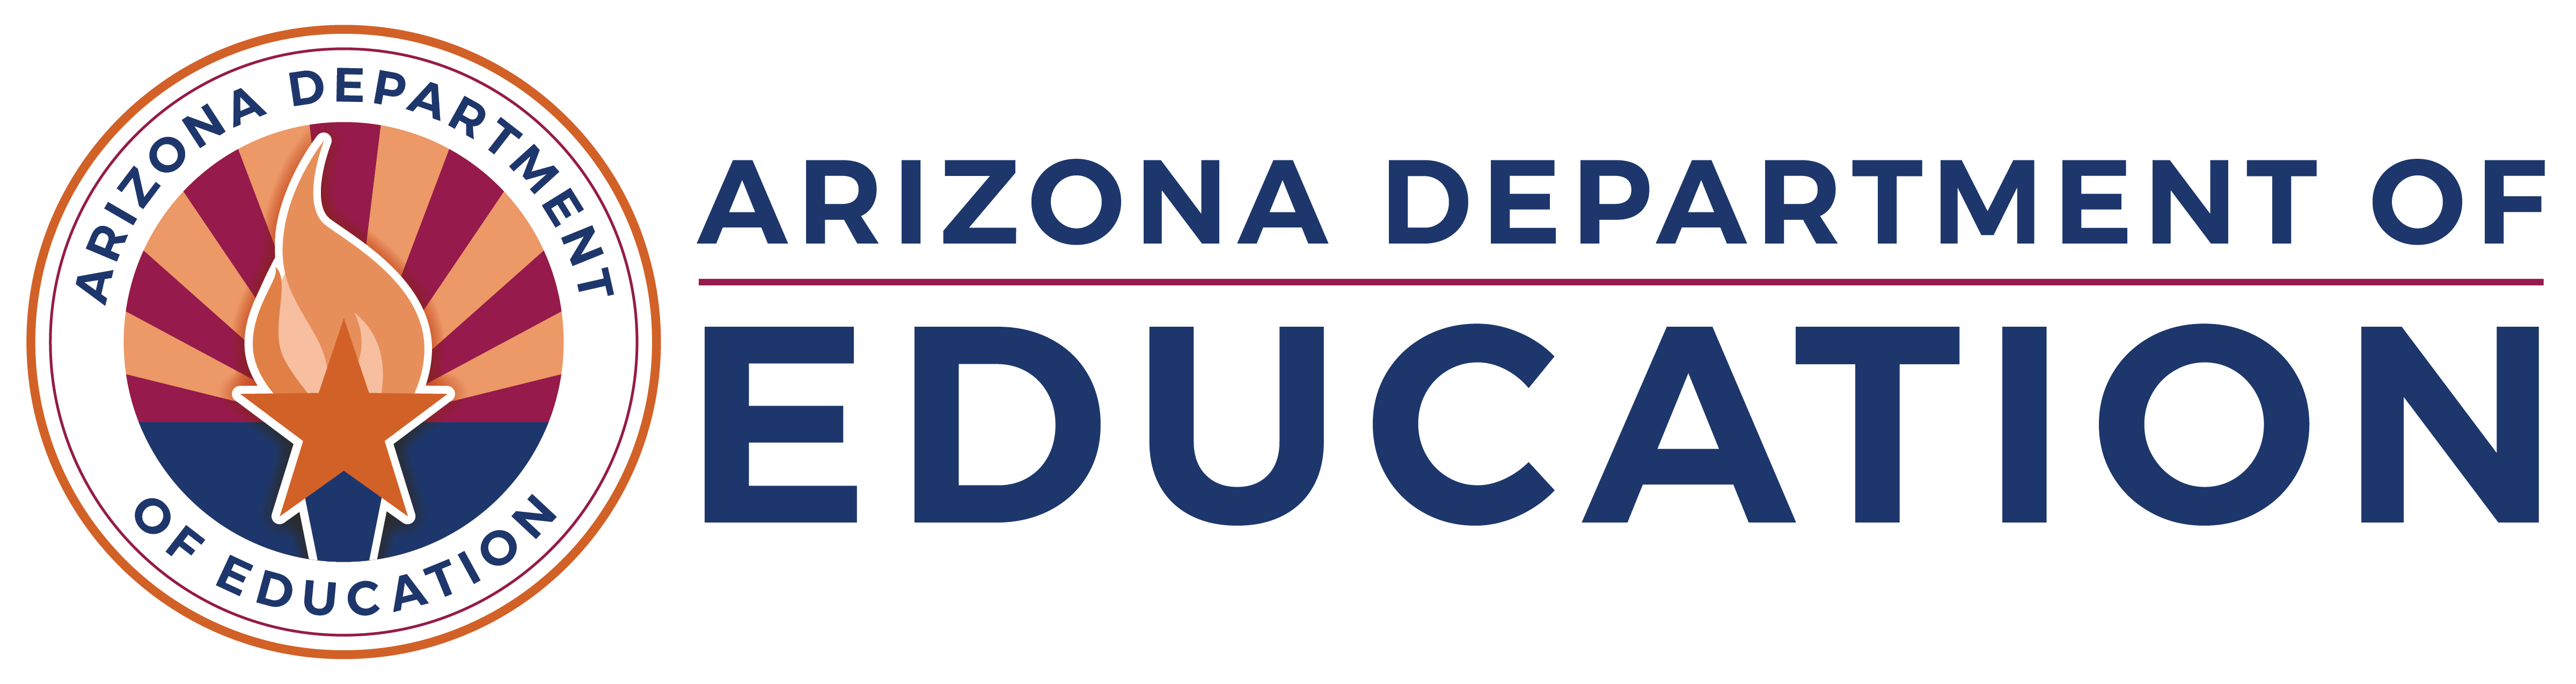 Arizona Department of Education Logo